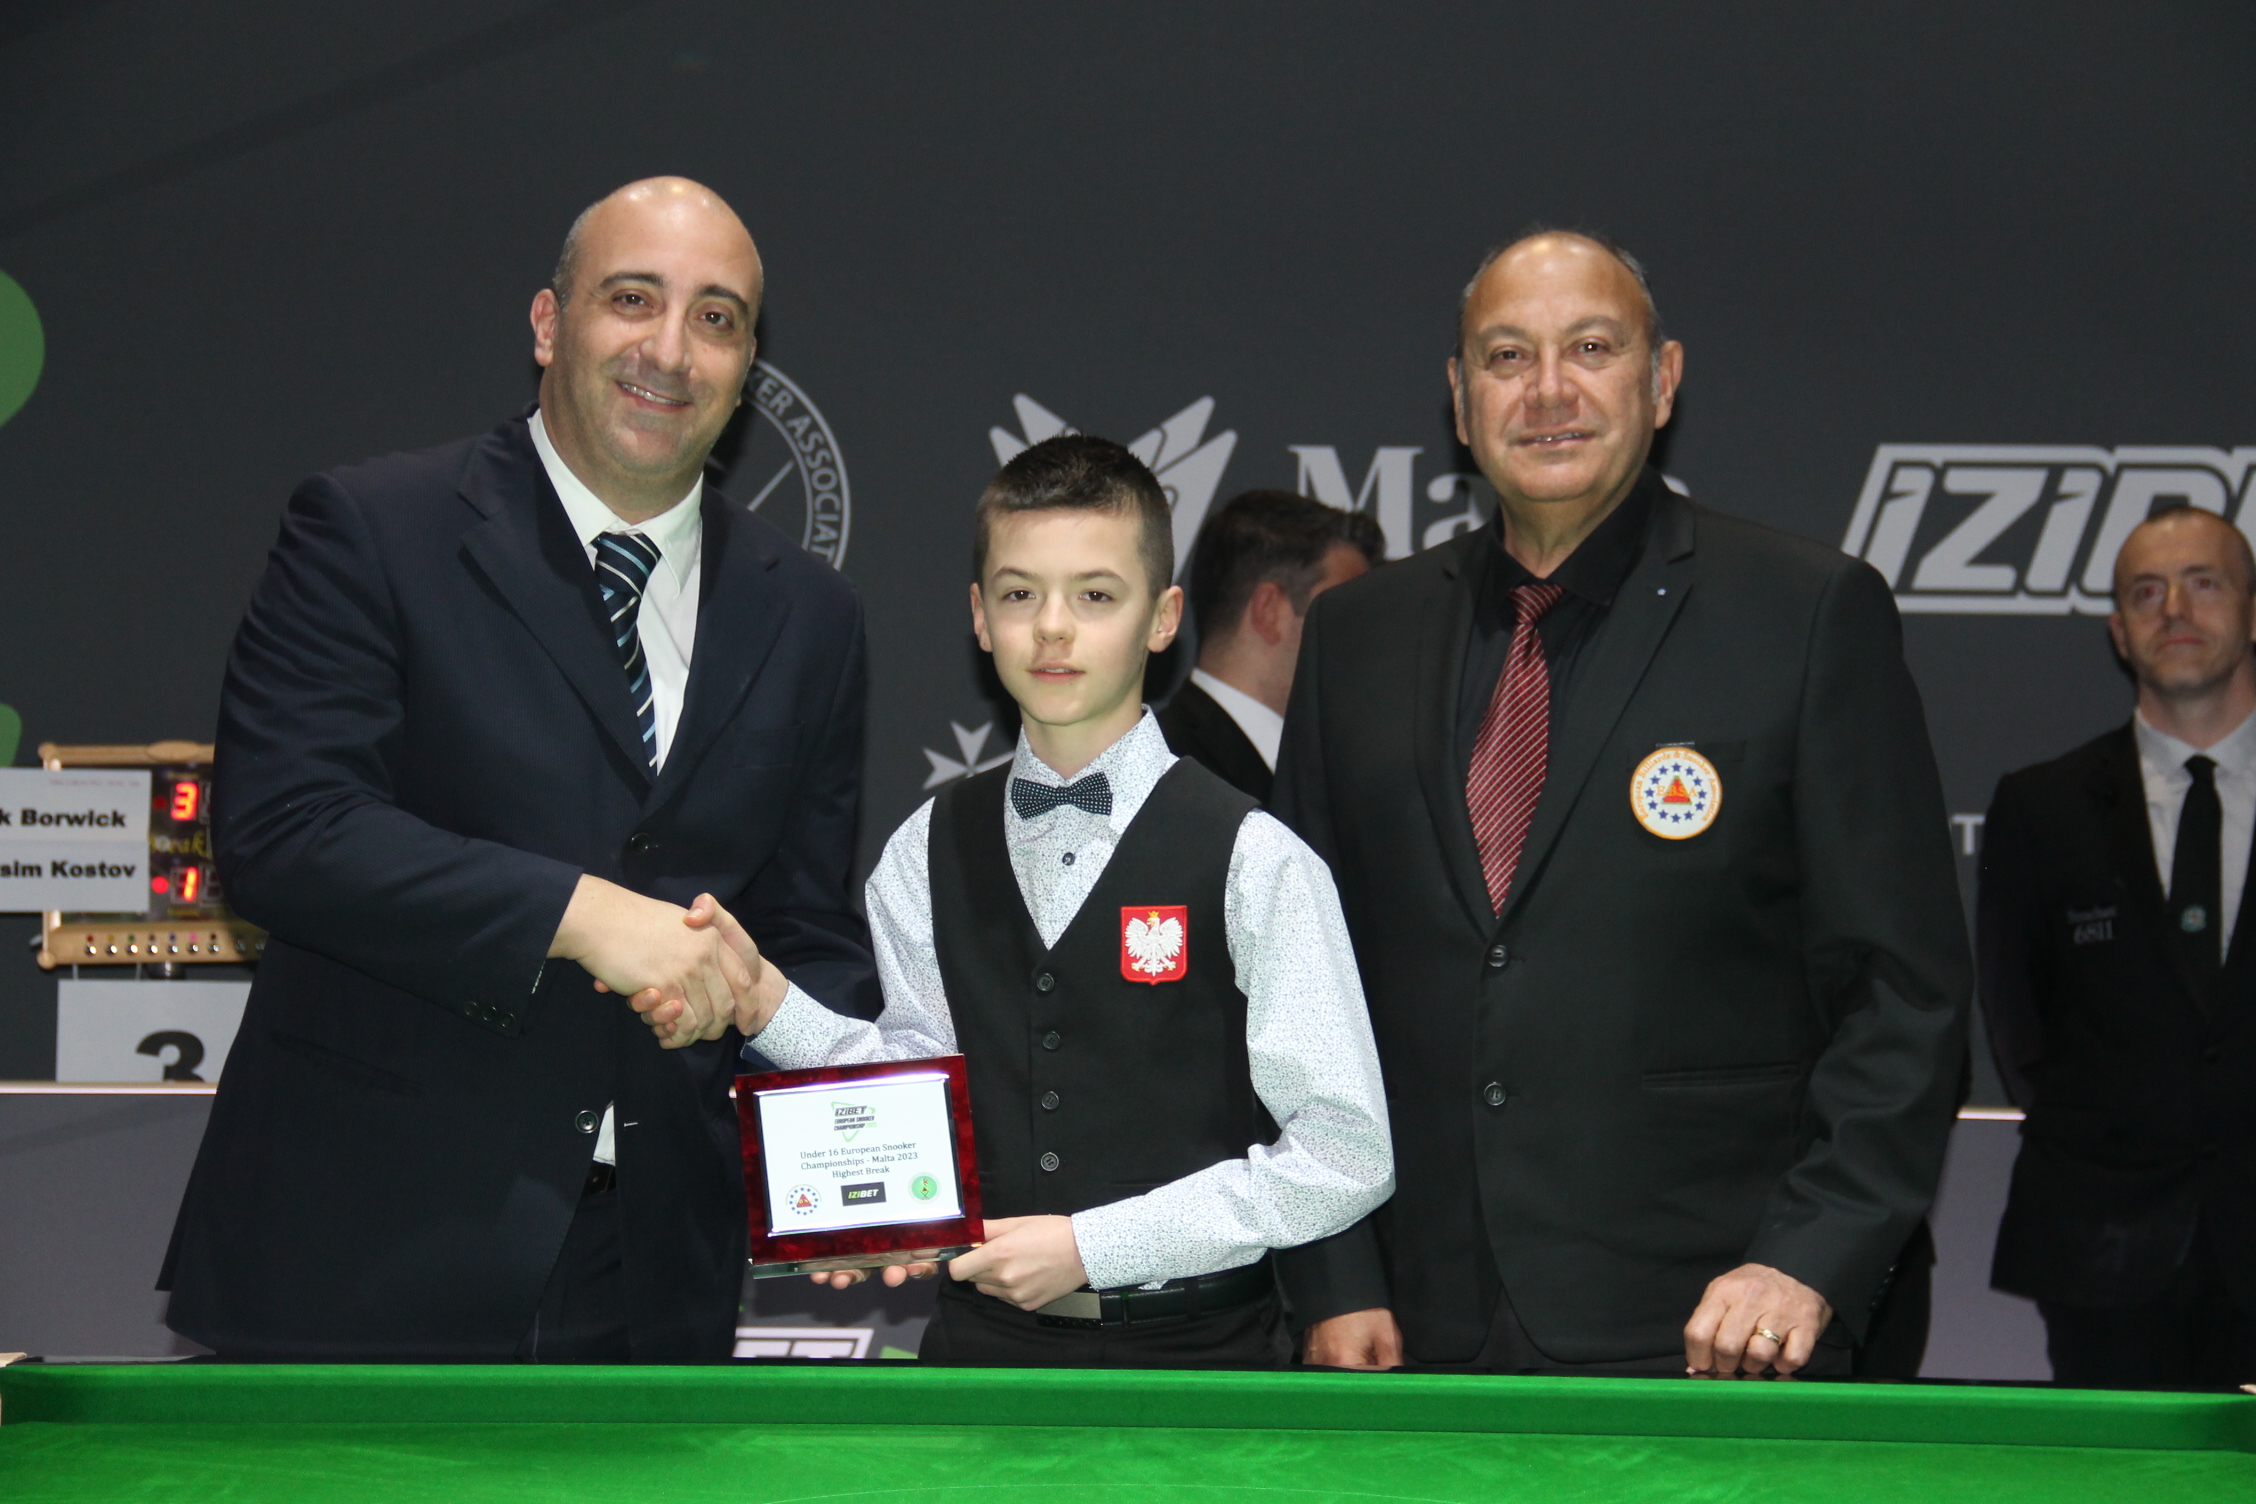 Jack Borwick crowned new European Under 16 snooker champion